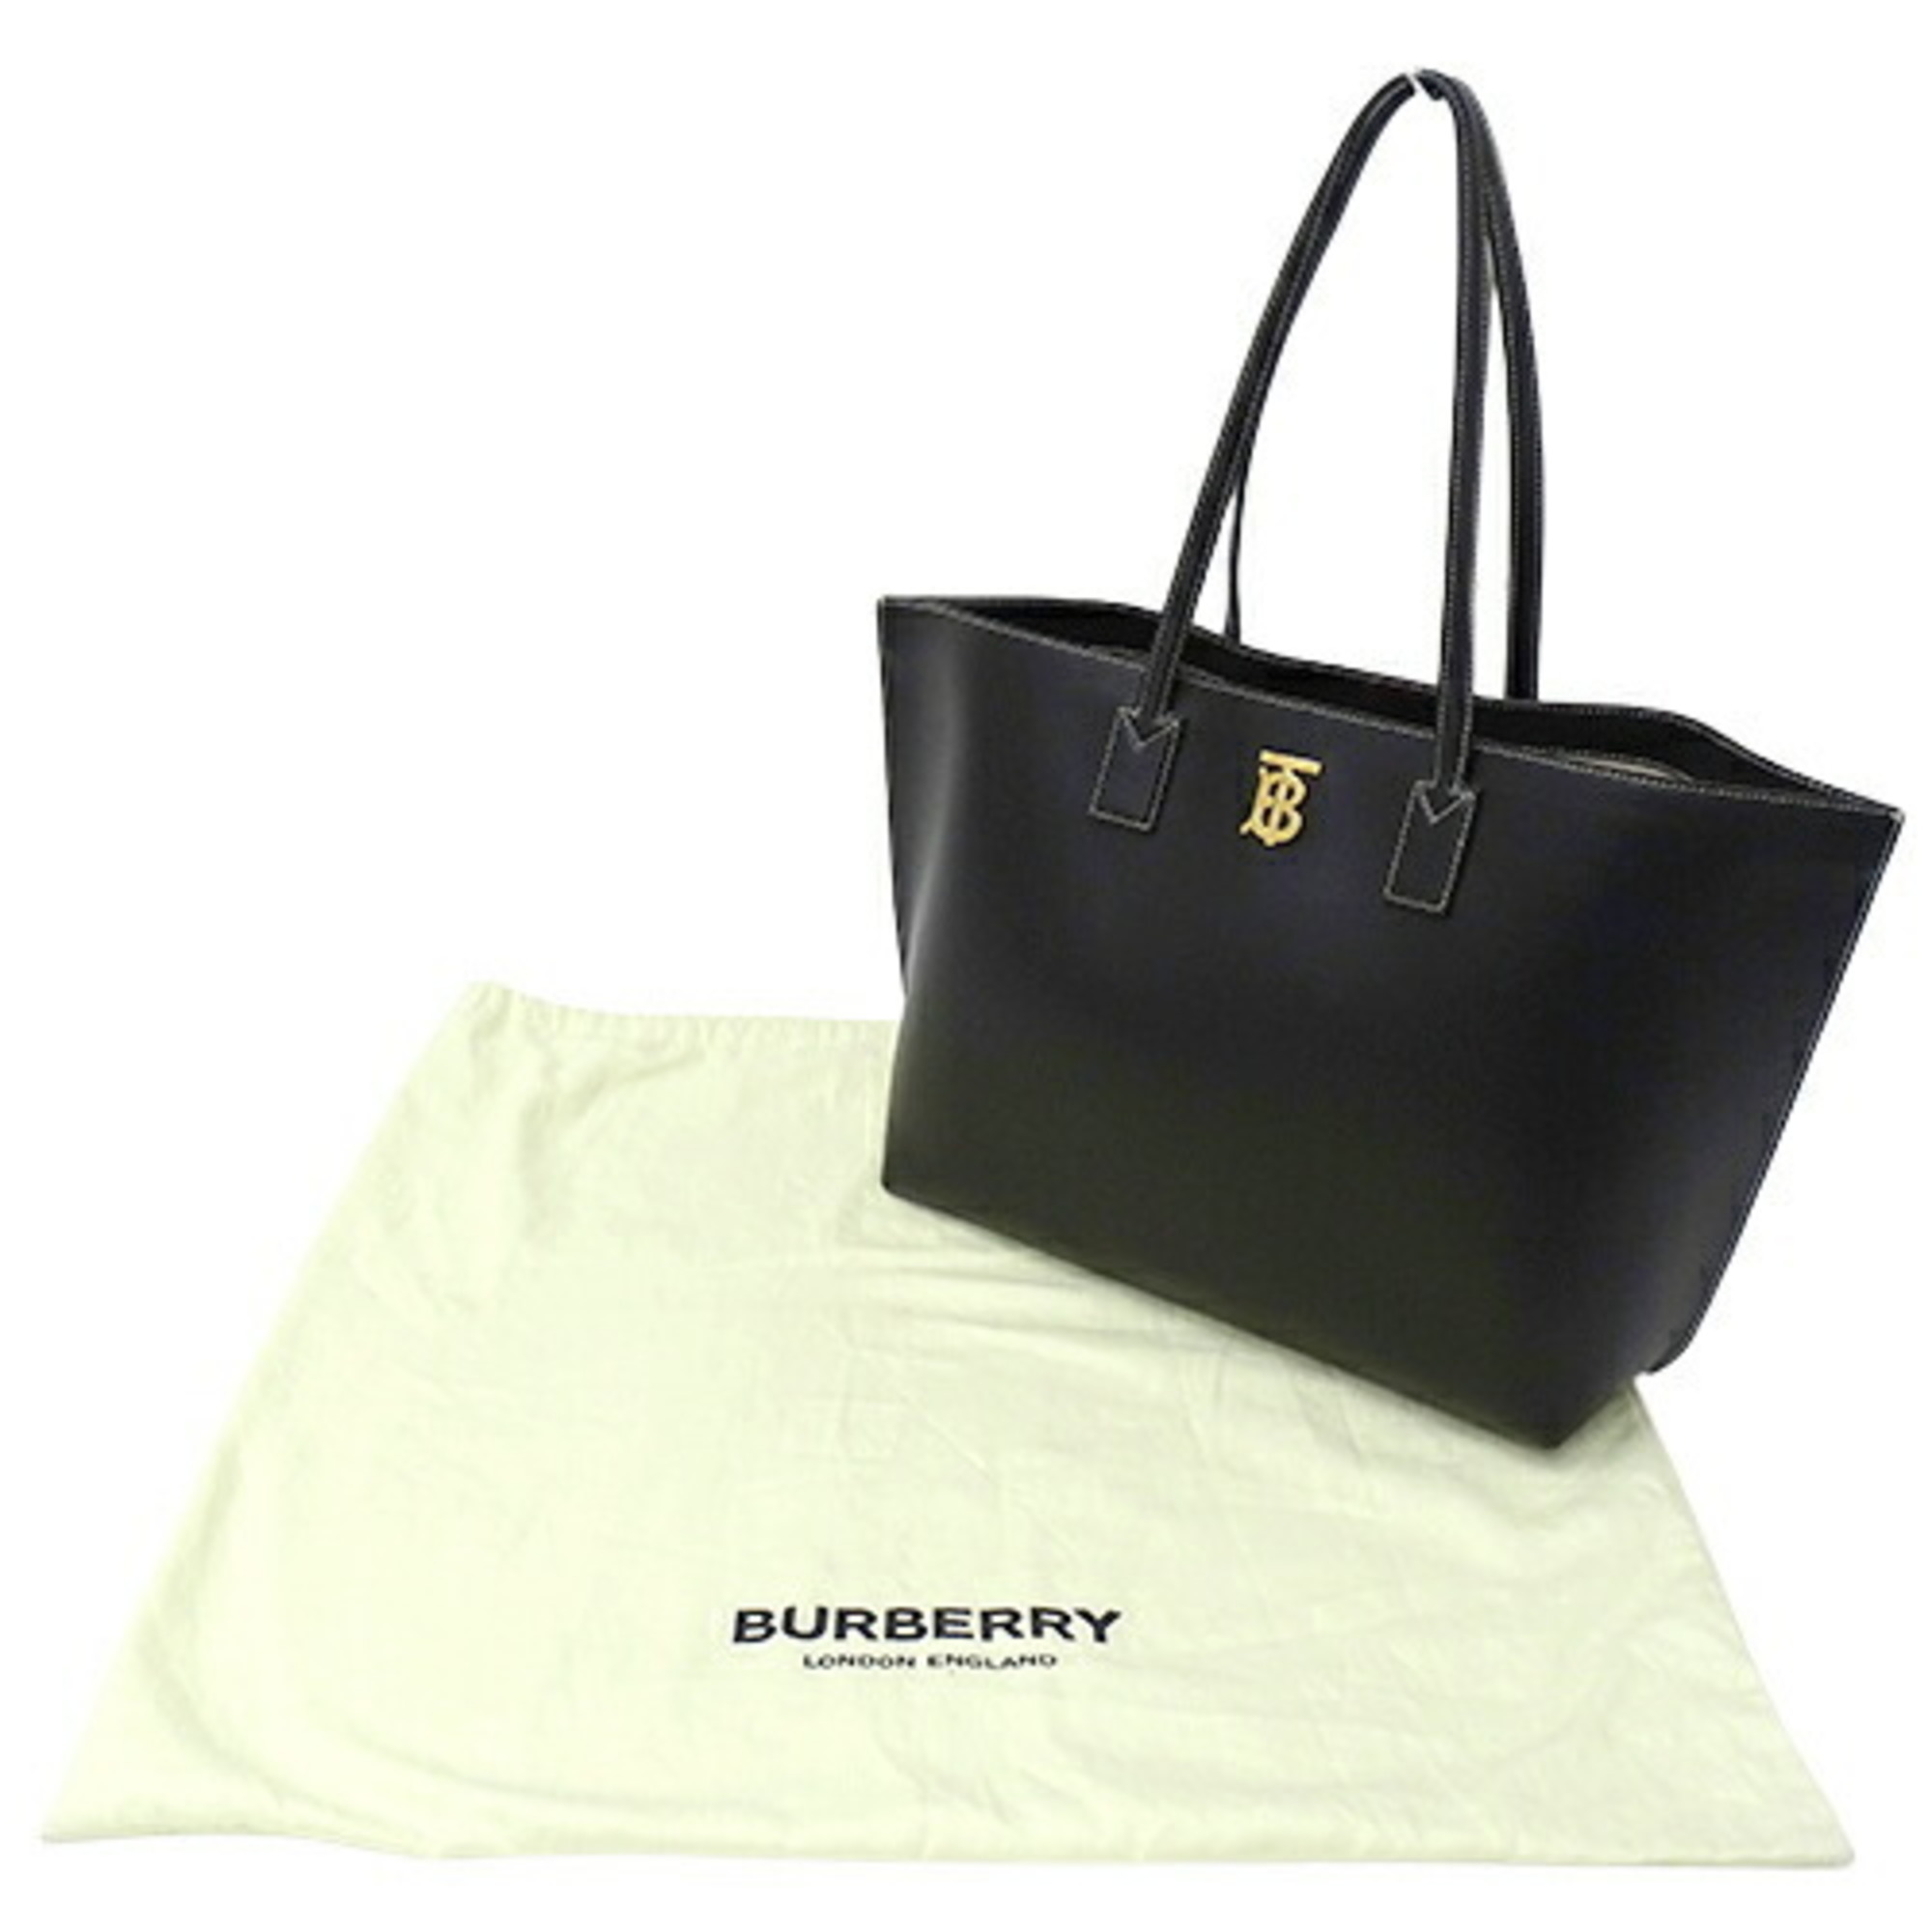 Burberry BURBERRY bag ladies tote shoulder leather black 8052726